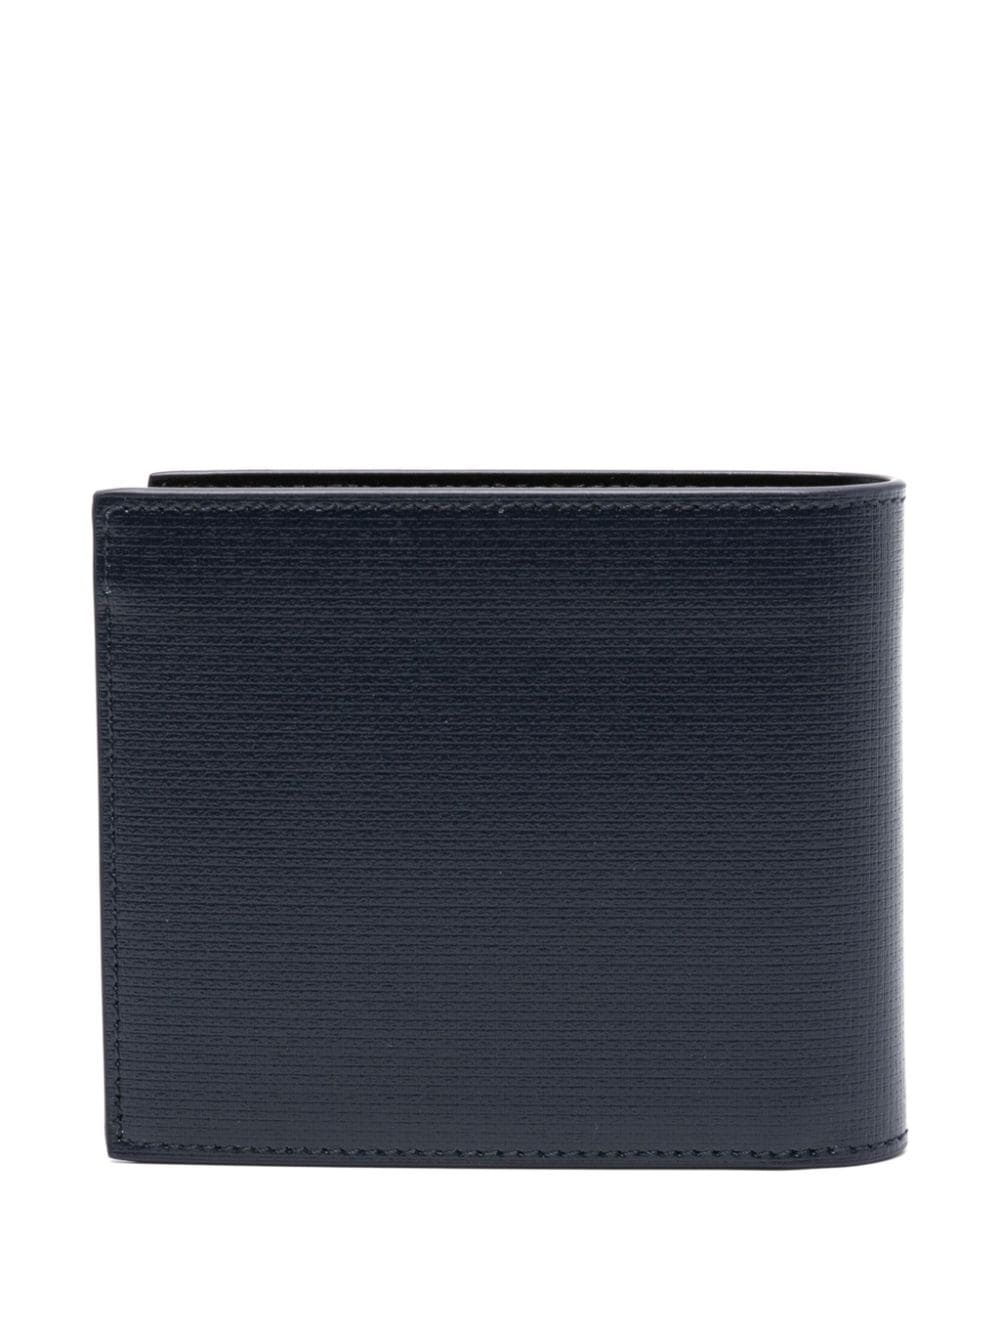 4G Classic bi-fold wallet - 2